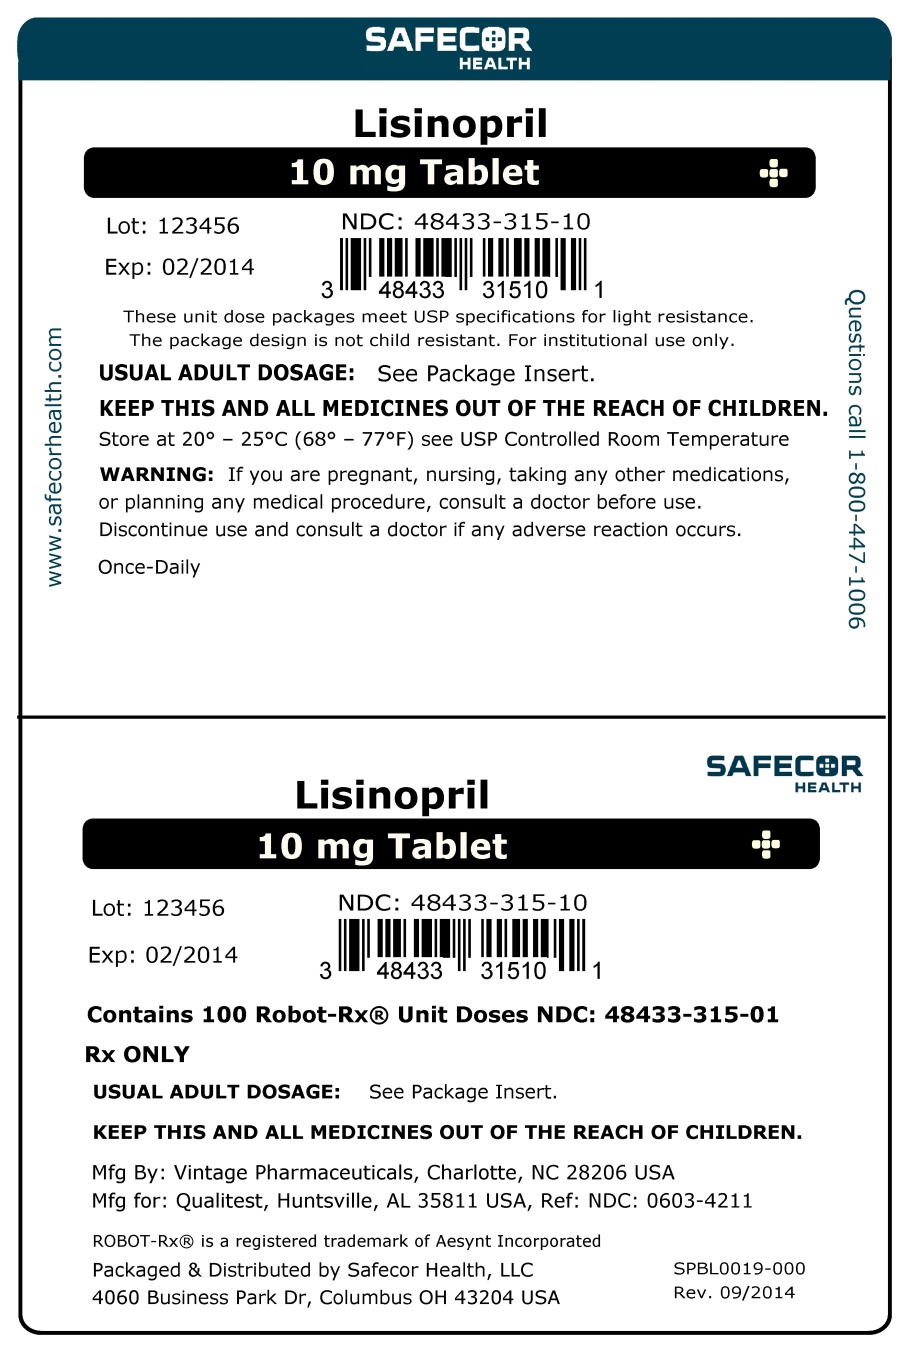 Lisinopril 10 mg Robot Unit Dose Box Label